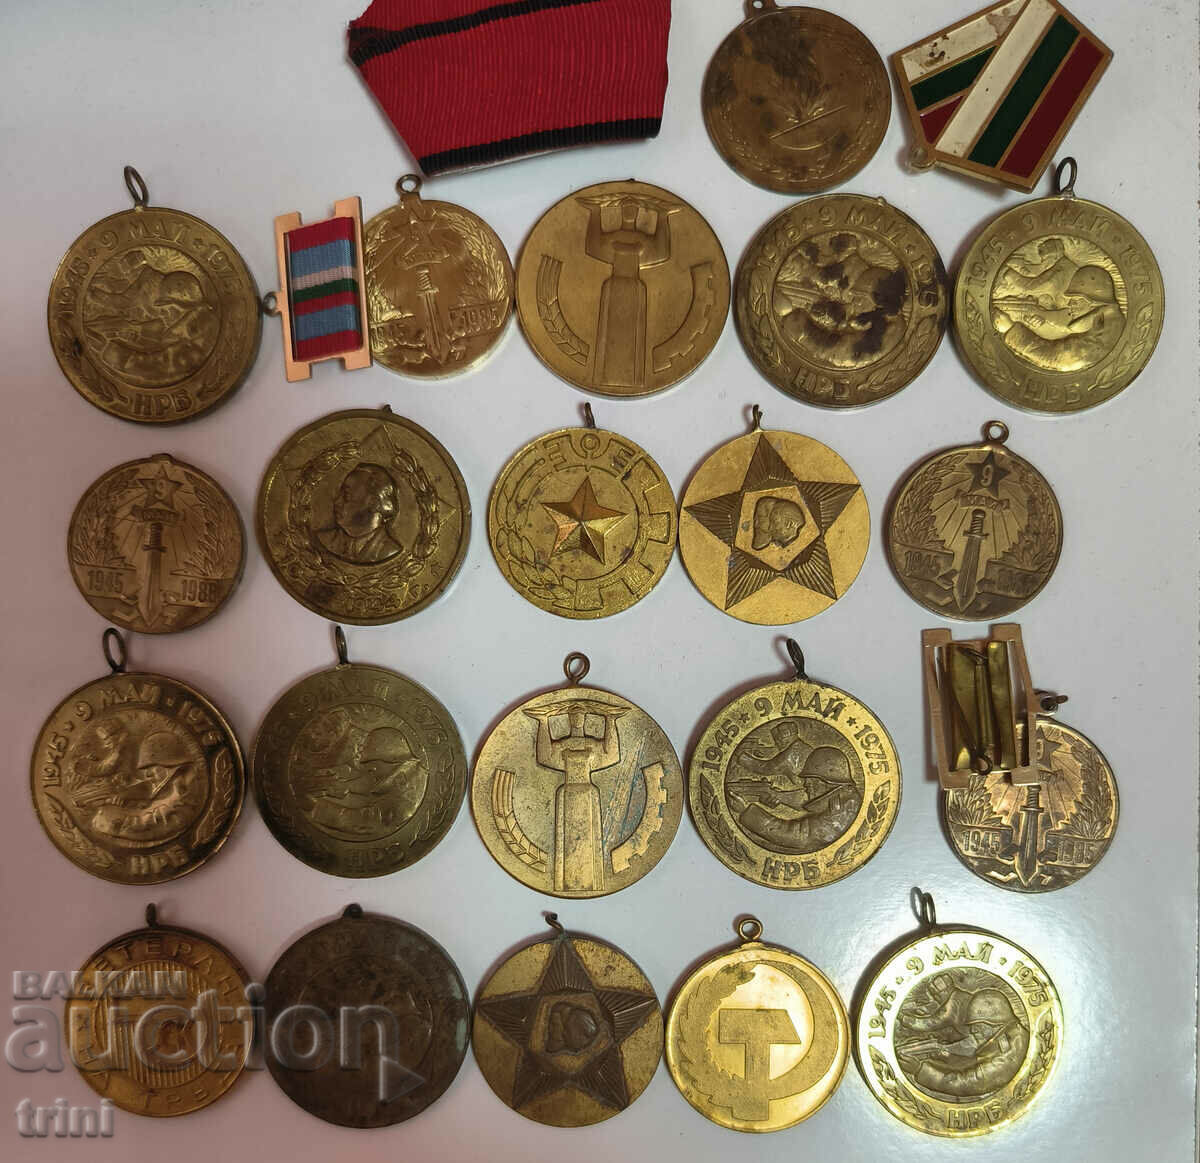 Lot of 21 medals